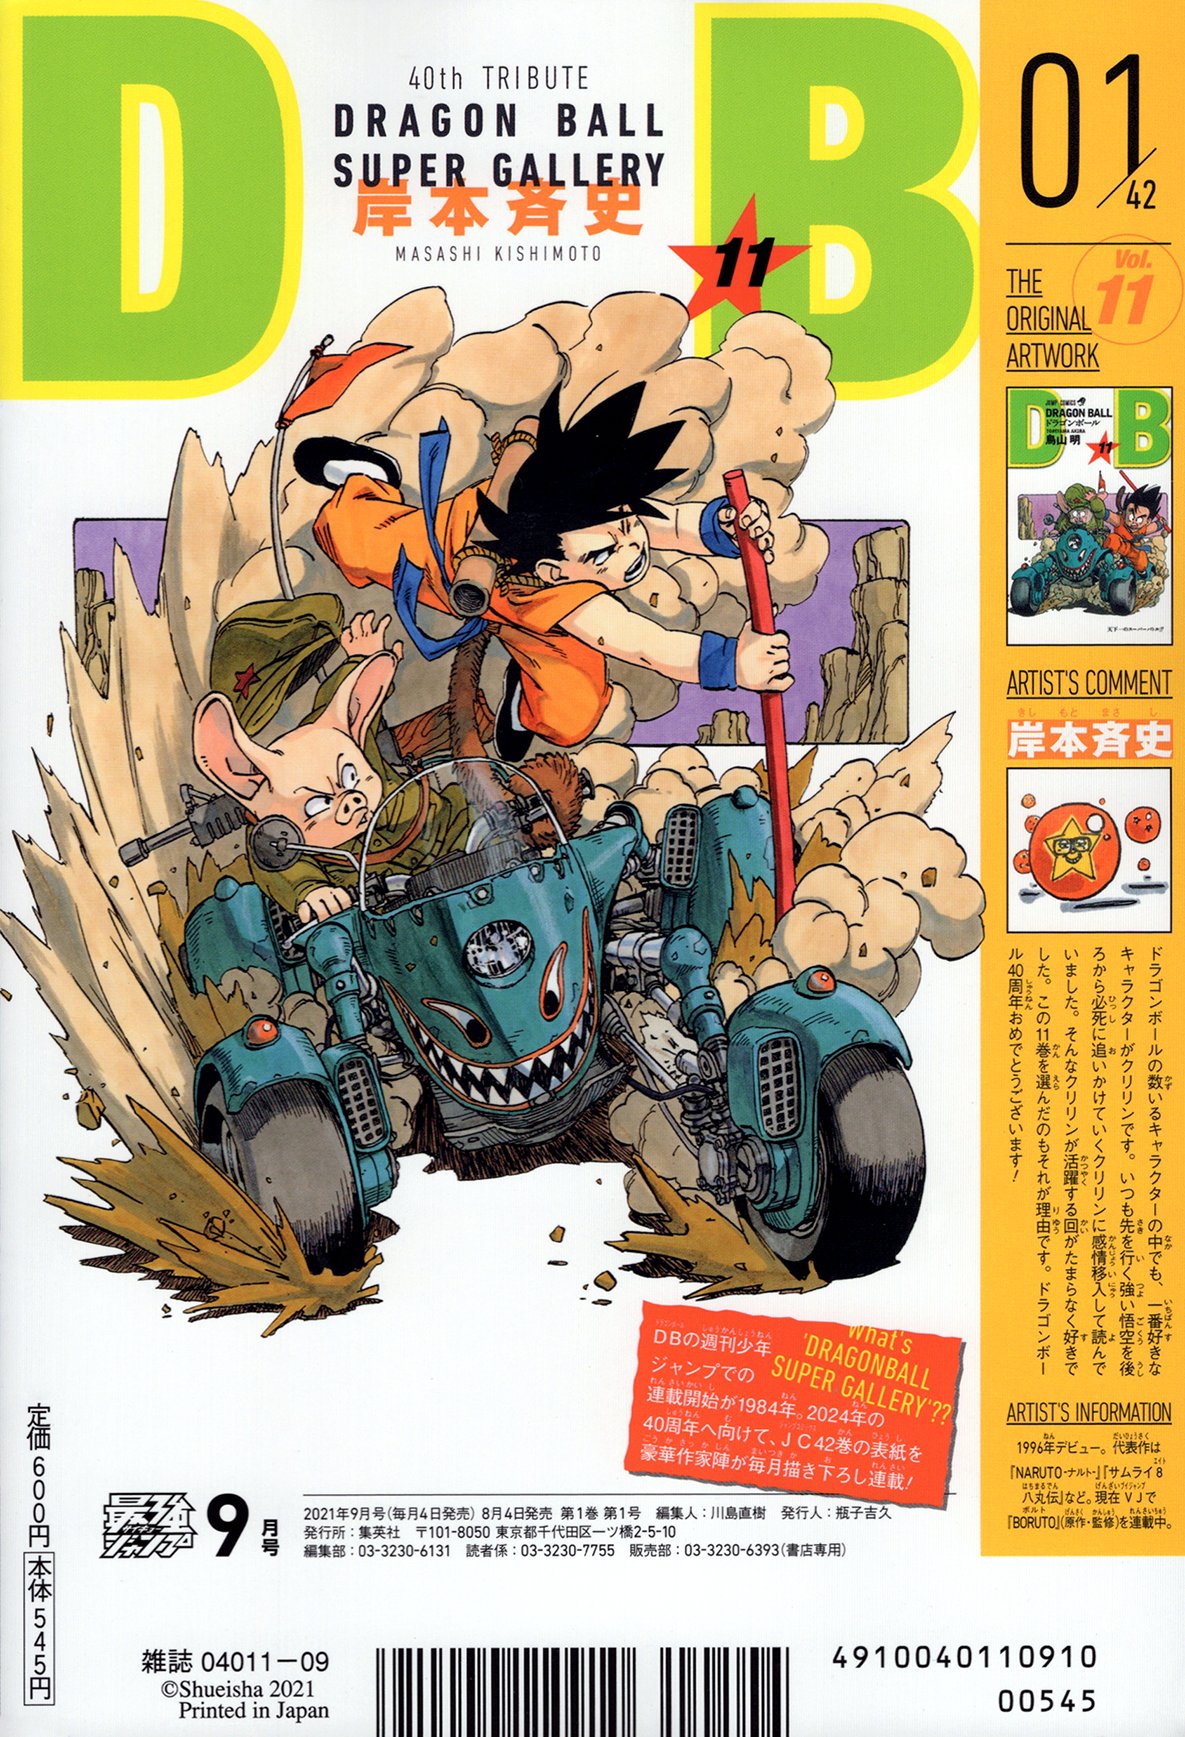 Dragon Ball Daima: All We Know About The New Anime On Young Goku